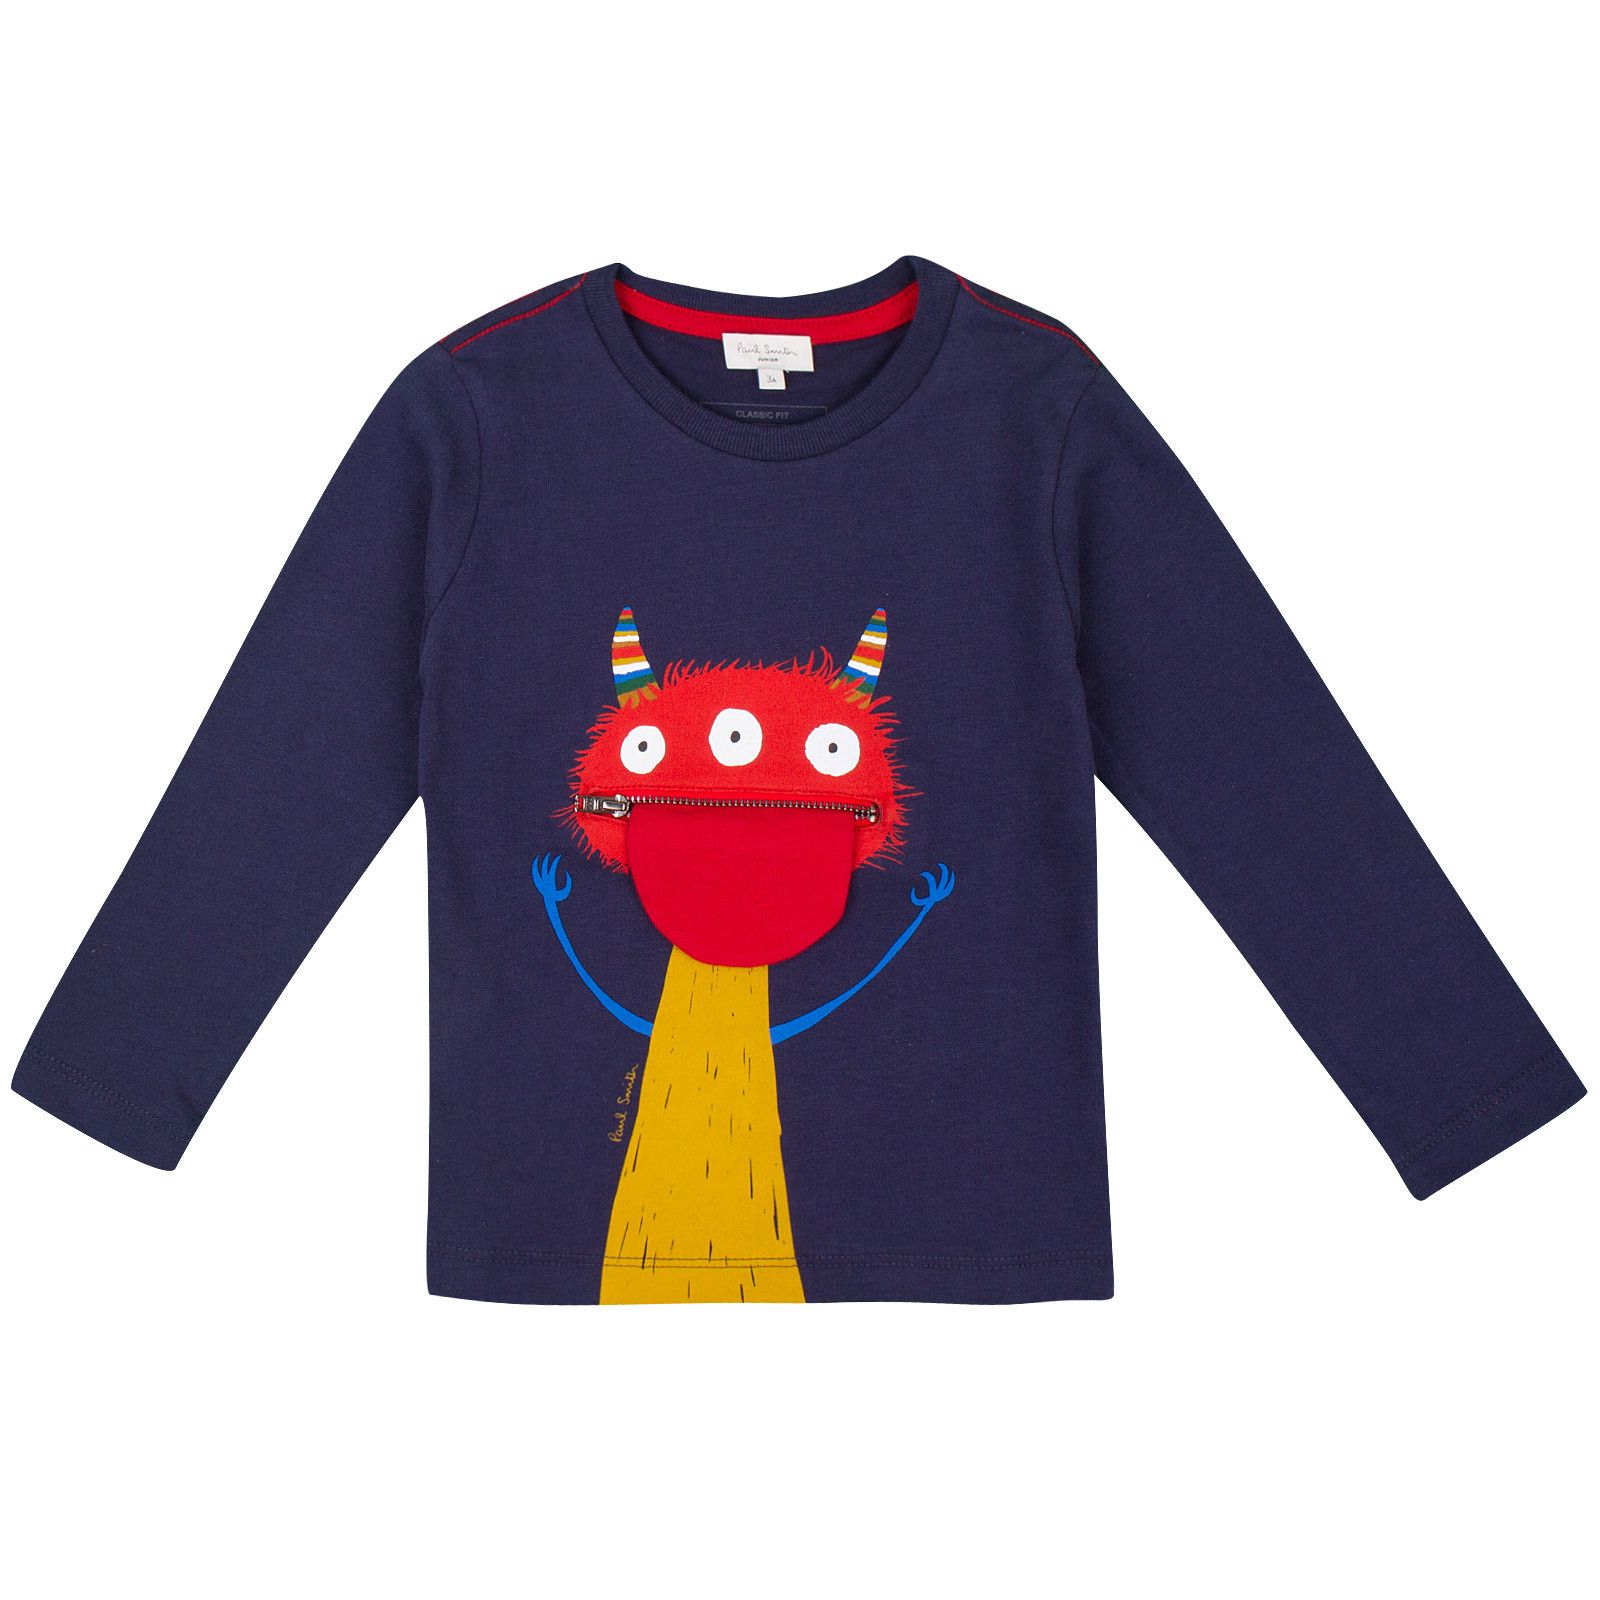 Boys Navy Blue Monster Printed Cotton T-Shirt - CÉMAROSE | Children's Fashion Store - 1